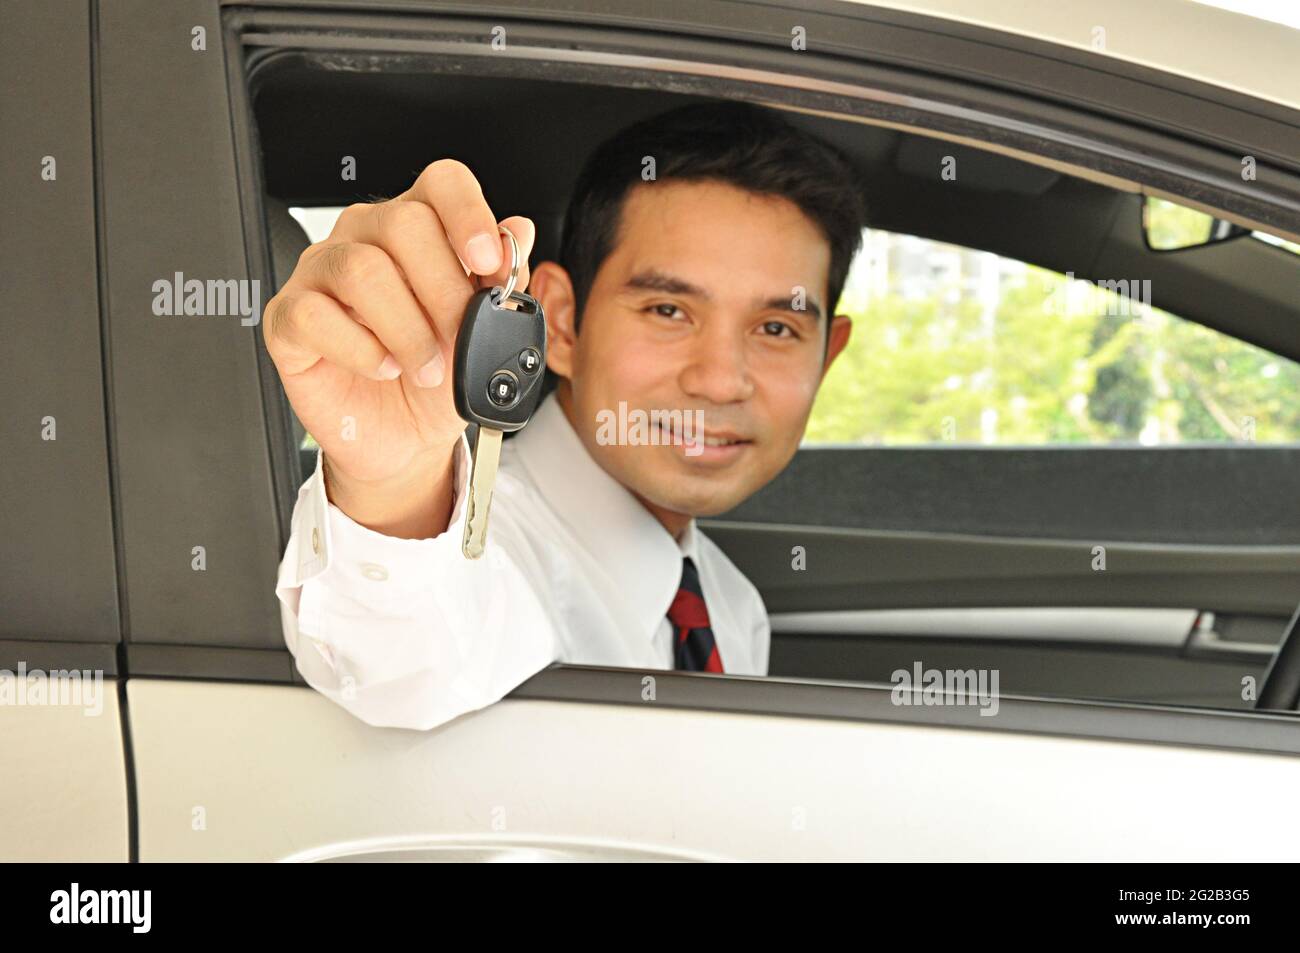 Businessman giving car key Stock Photo